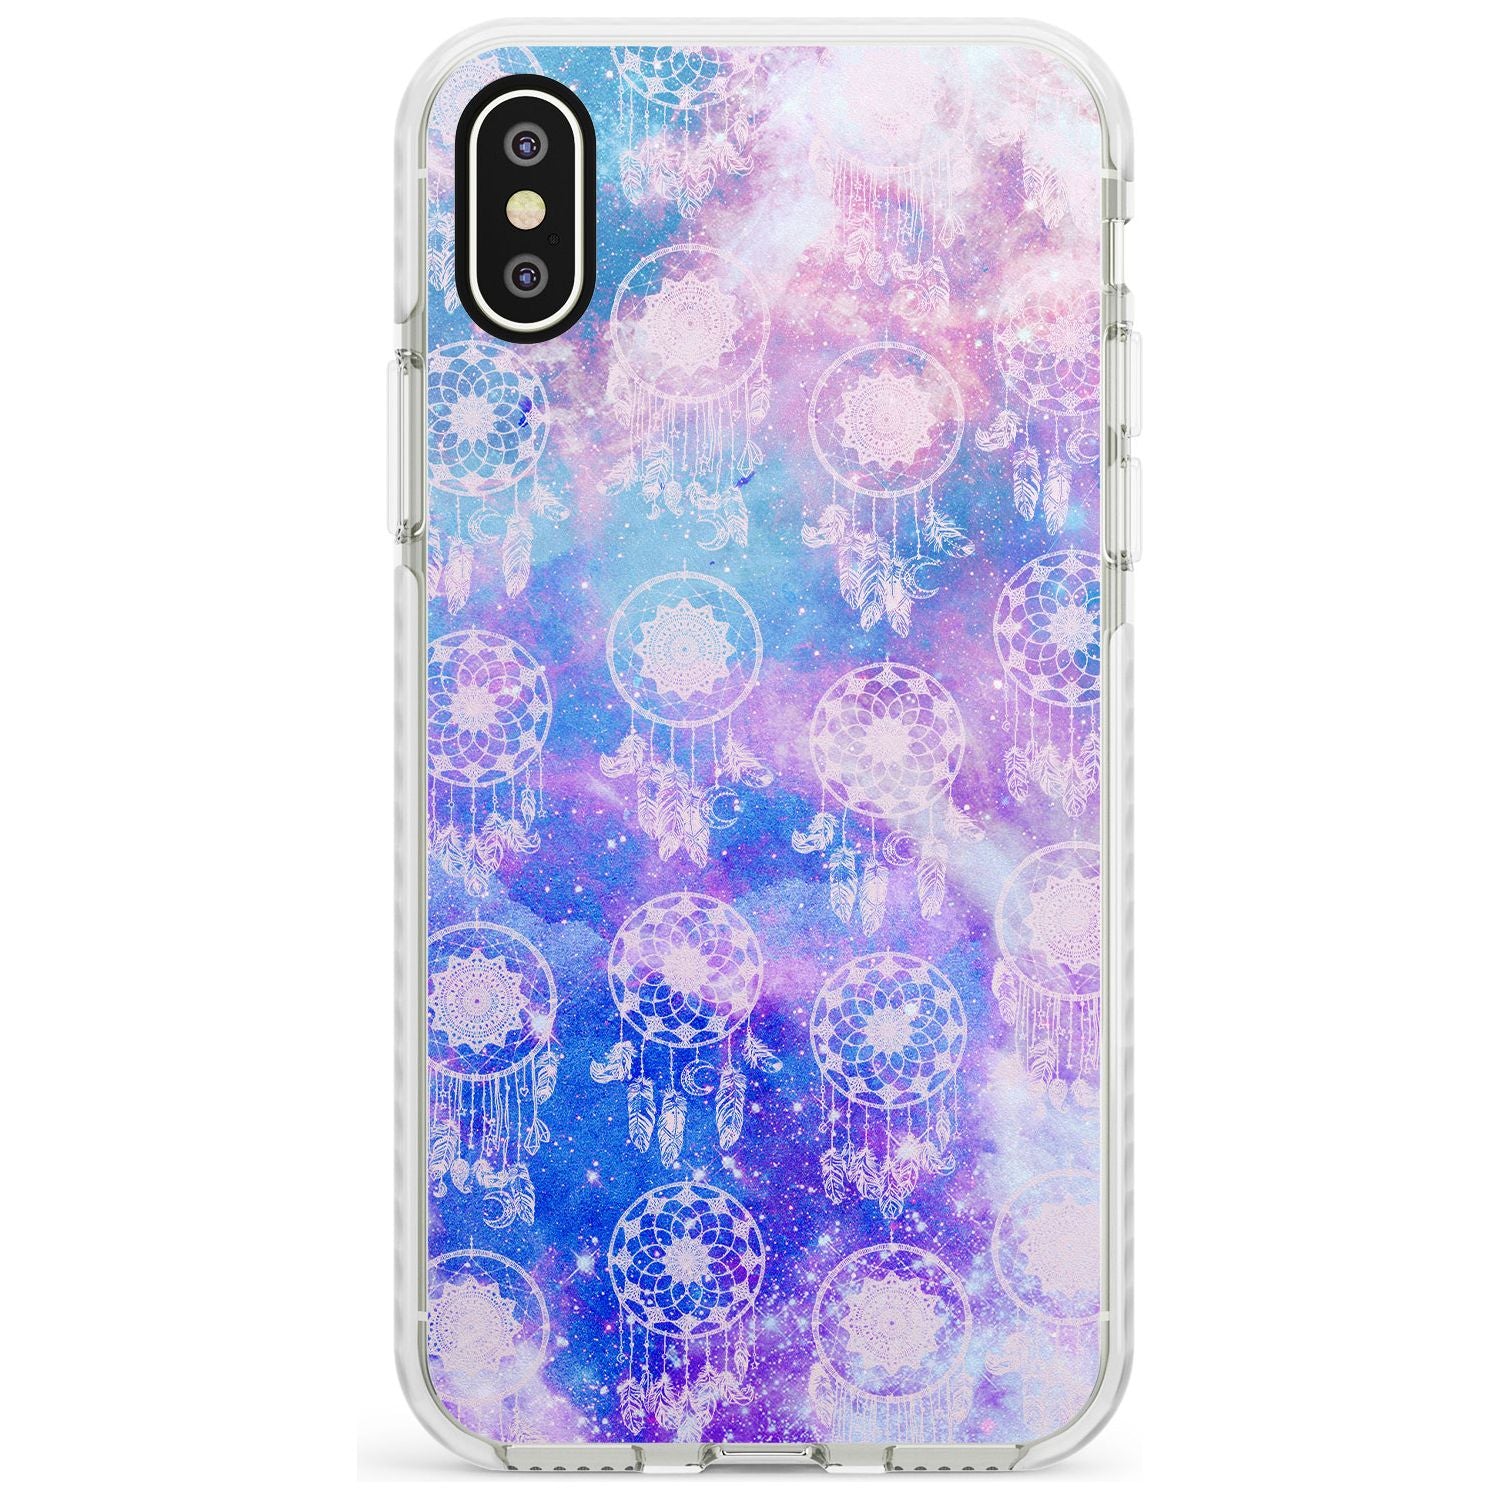 Dreamcatcher Pattern Galaxy Print Tie Dye Impact Phone Case for iPhone X XS Max XR